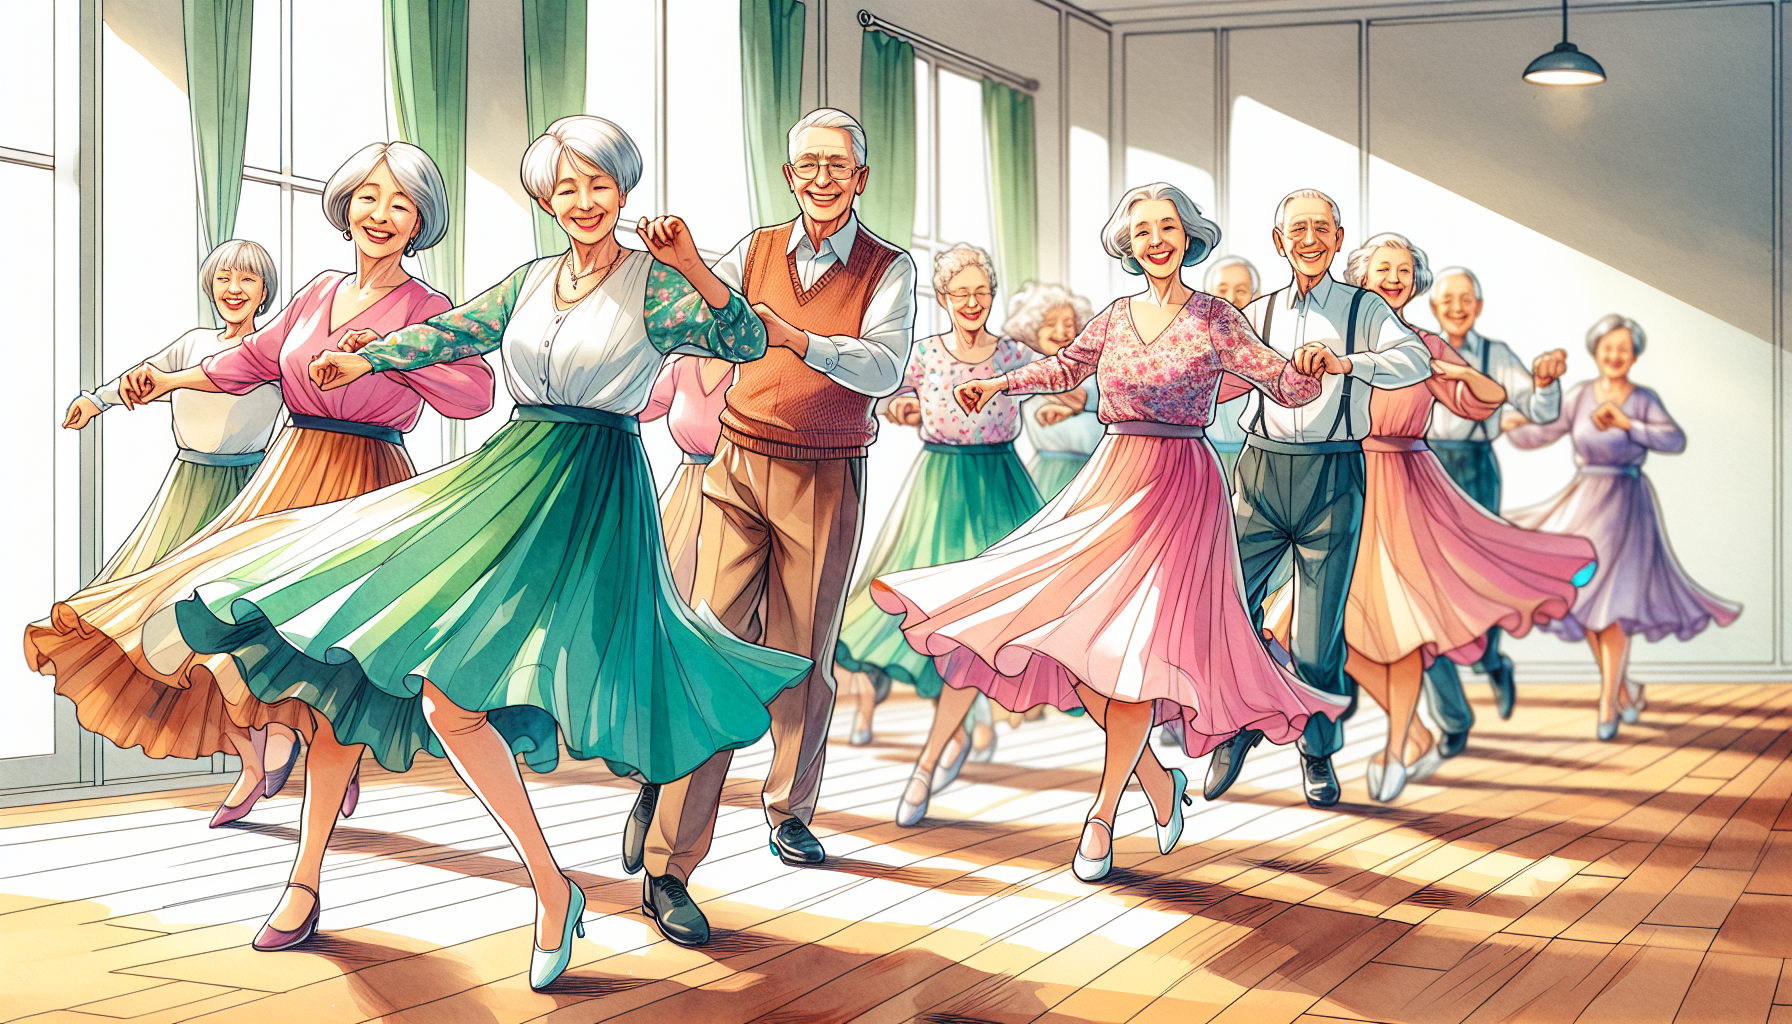 Elderly individuals dancing in a group dance class